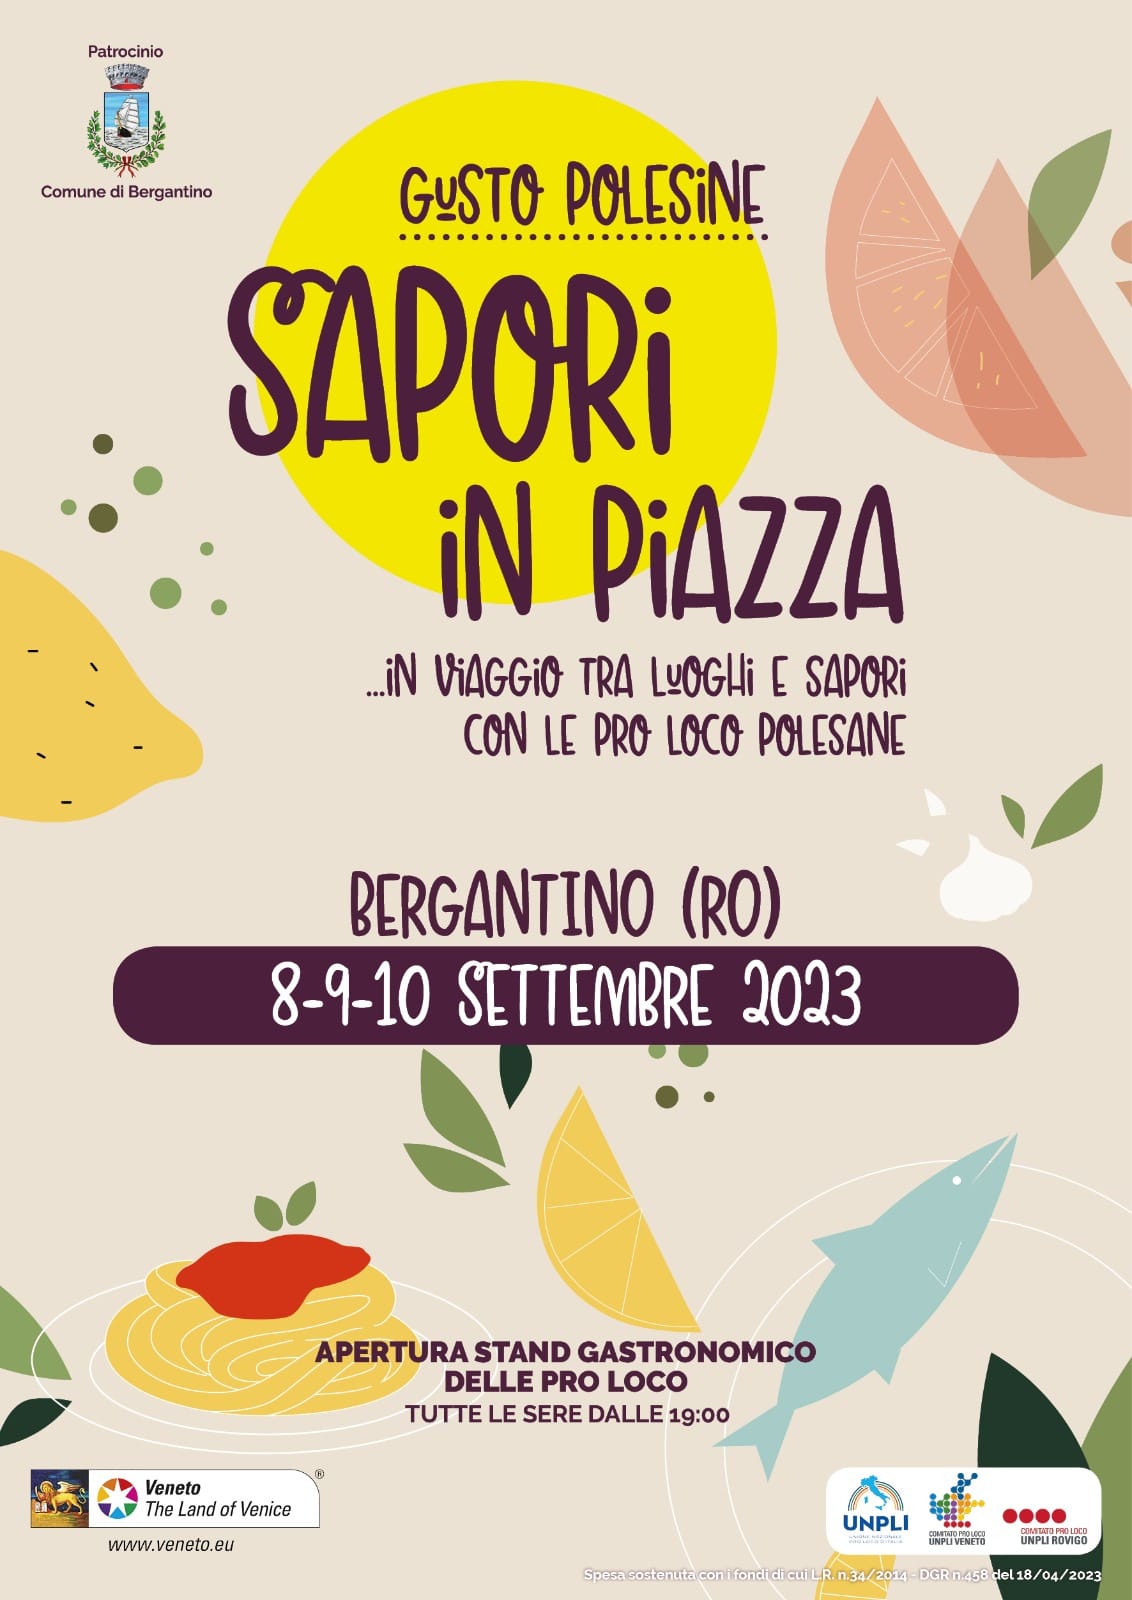 Sapori in piazza - Bergantino (RO)